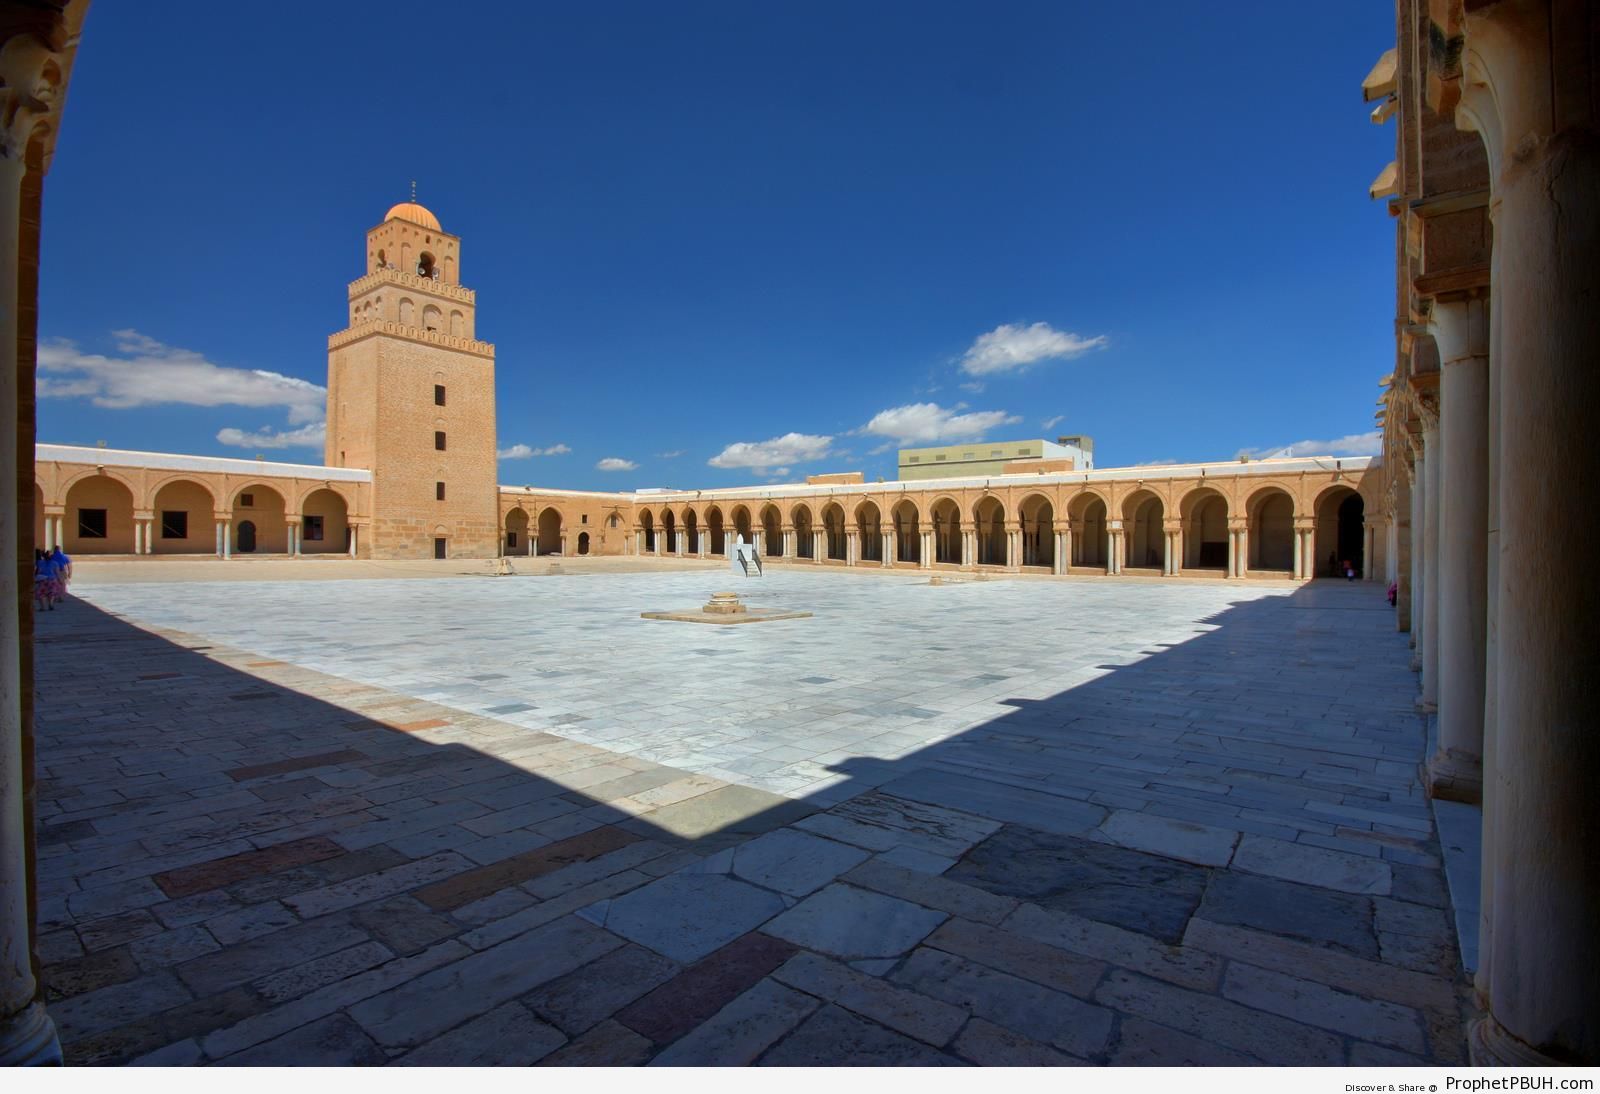 Mosque of Uqba (The Great Mosque of Kairouan) in Kairouan, Tunisia - Islamic Architecture